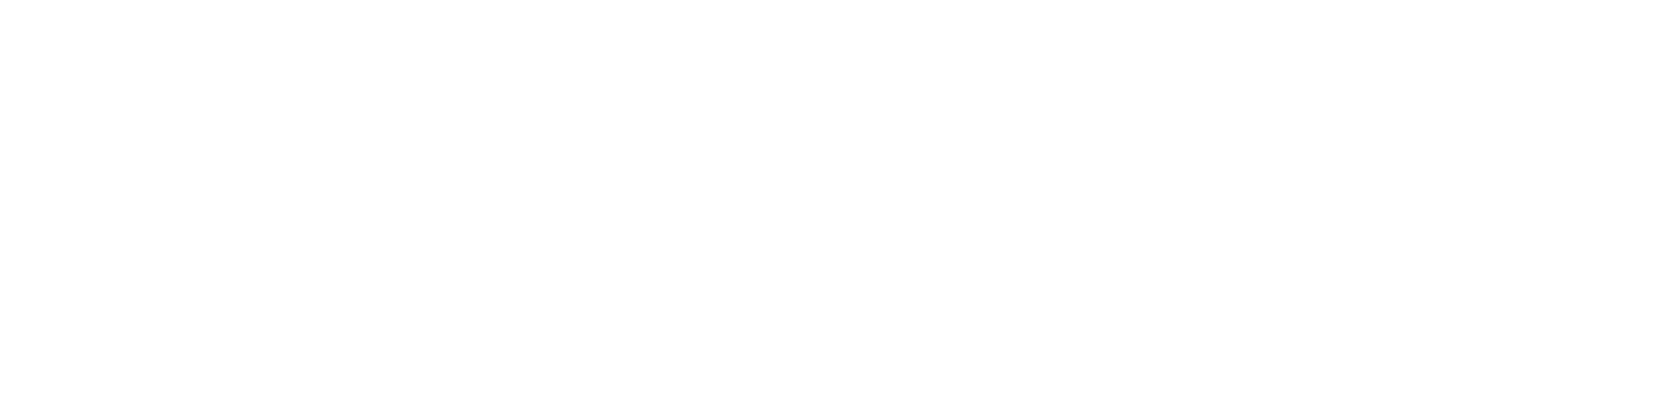 Transreport.png